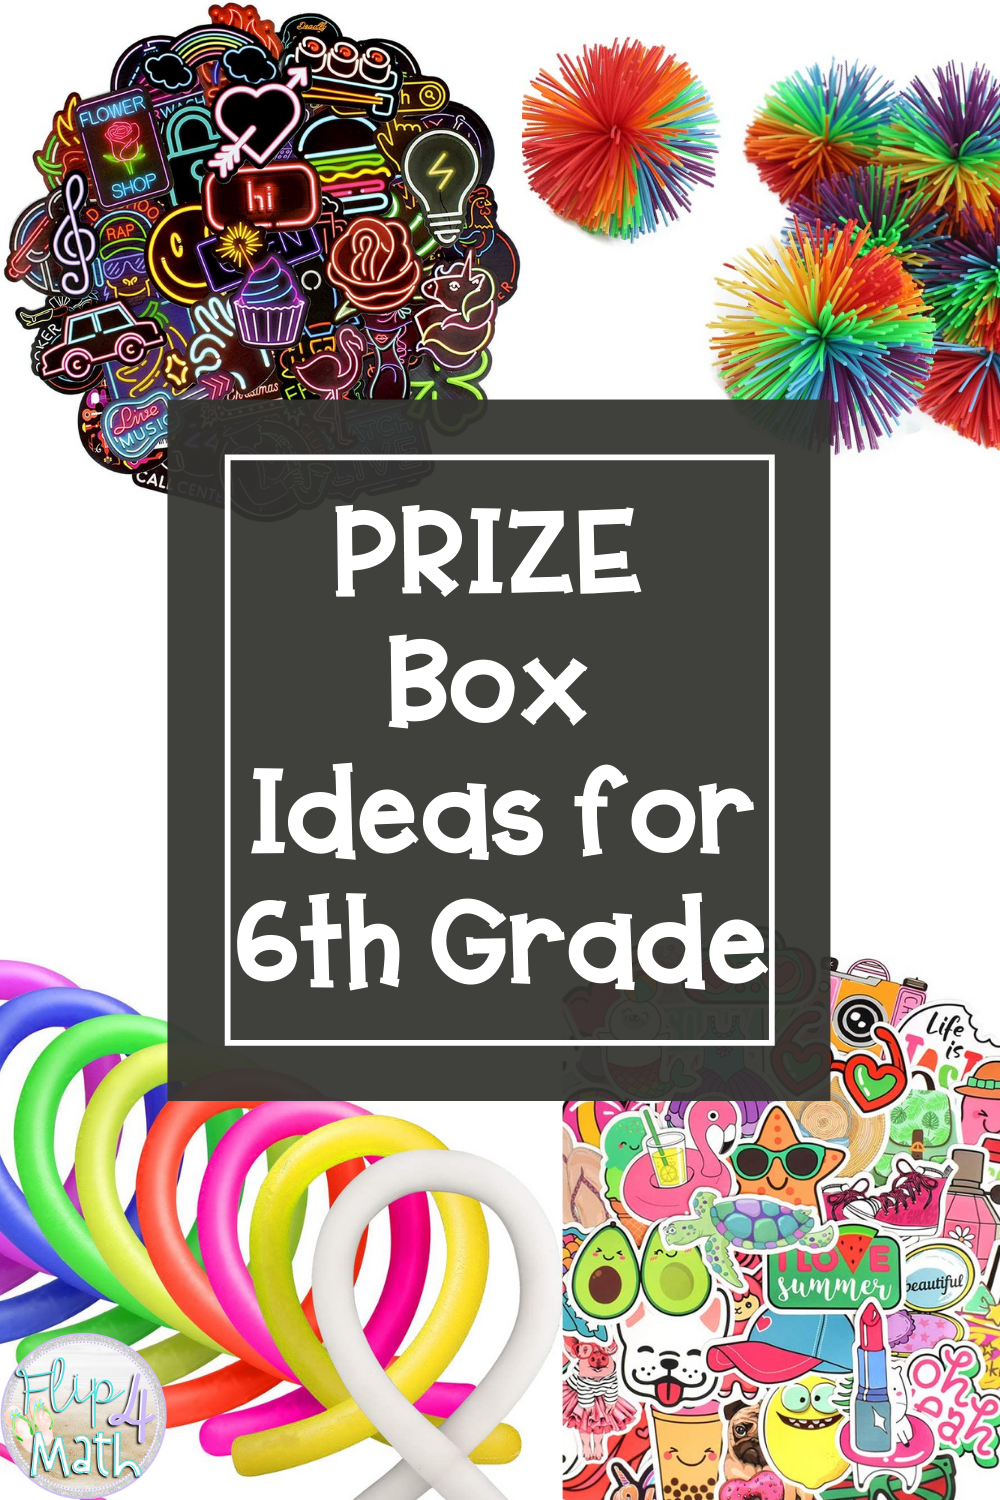 Sixth Graders Still Love the Prize Box!